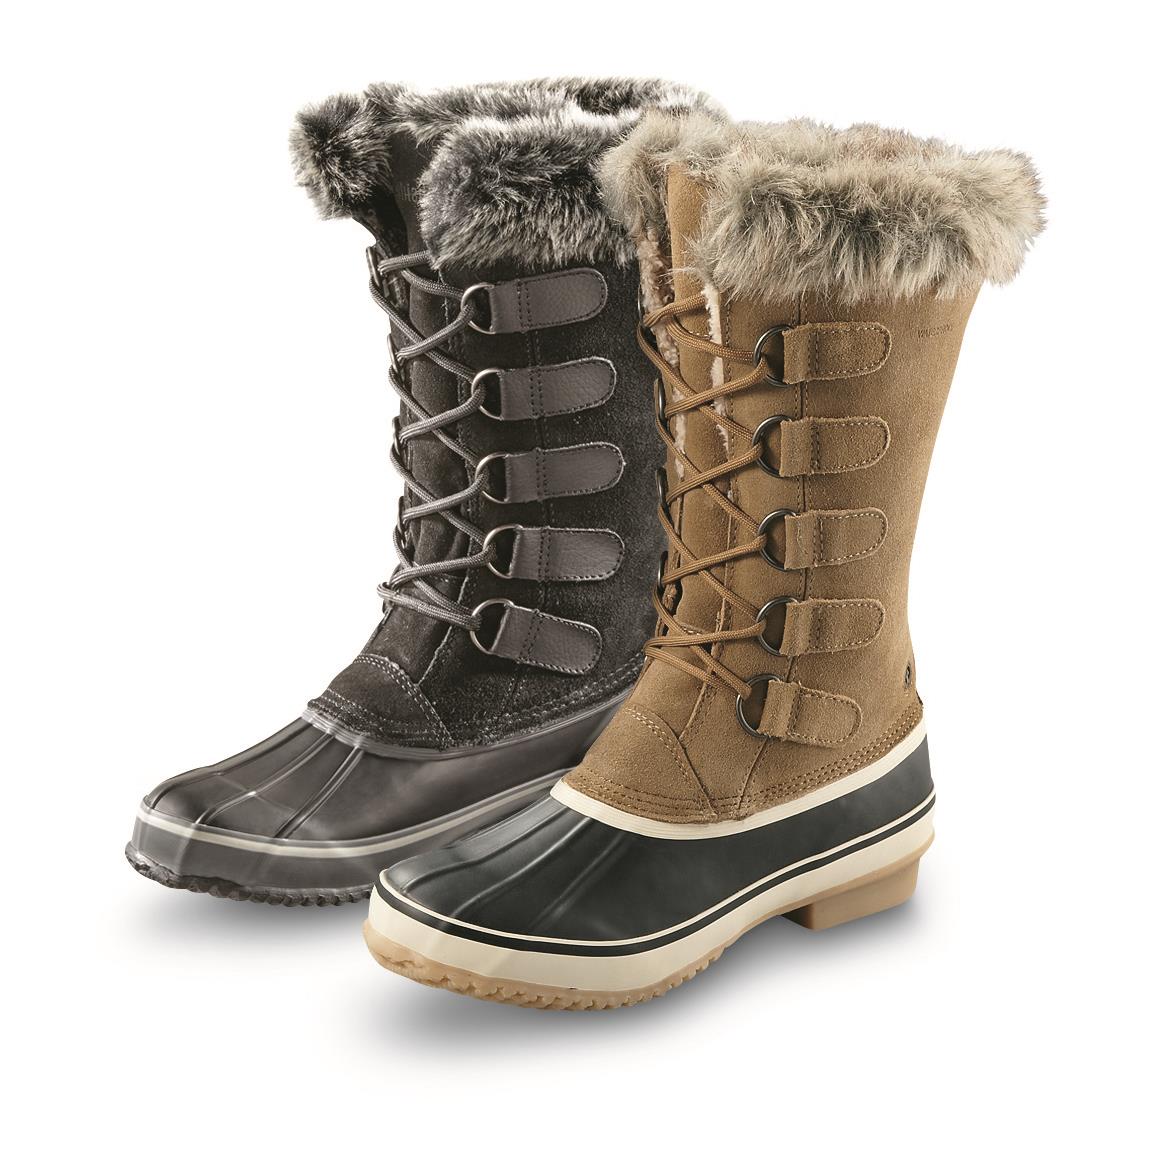 women winter boots northside womenu0027s kathmandu insulated waterproof winter boots, 200 grams in  onyx and kbtfvxd